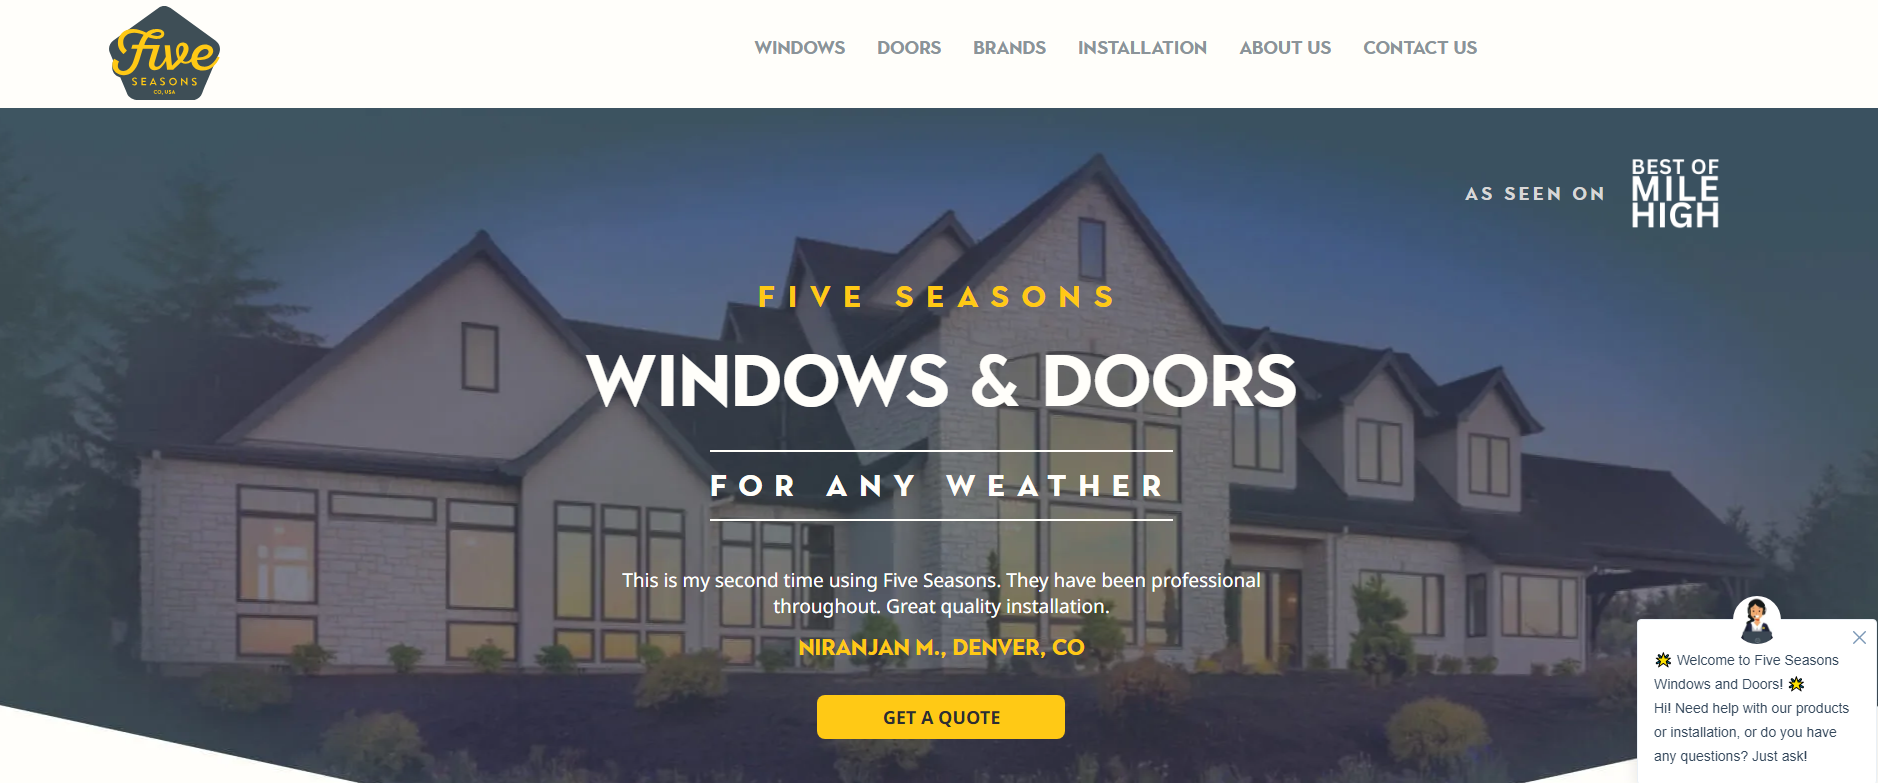 Five Seasons Windows & Doors hero